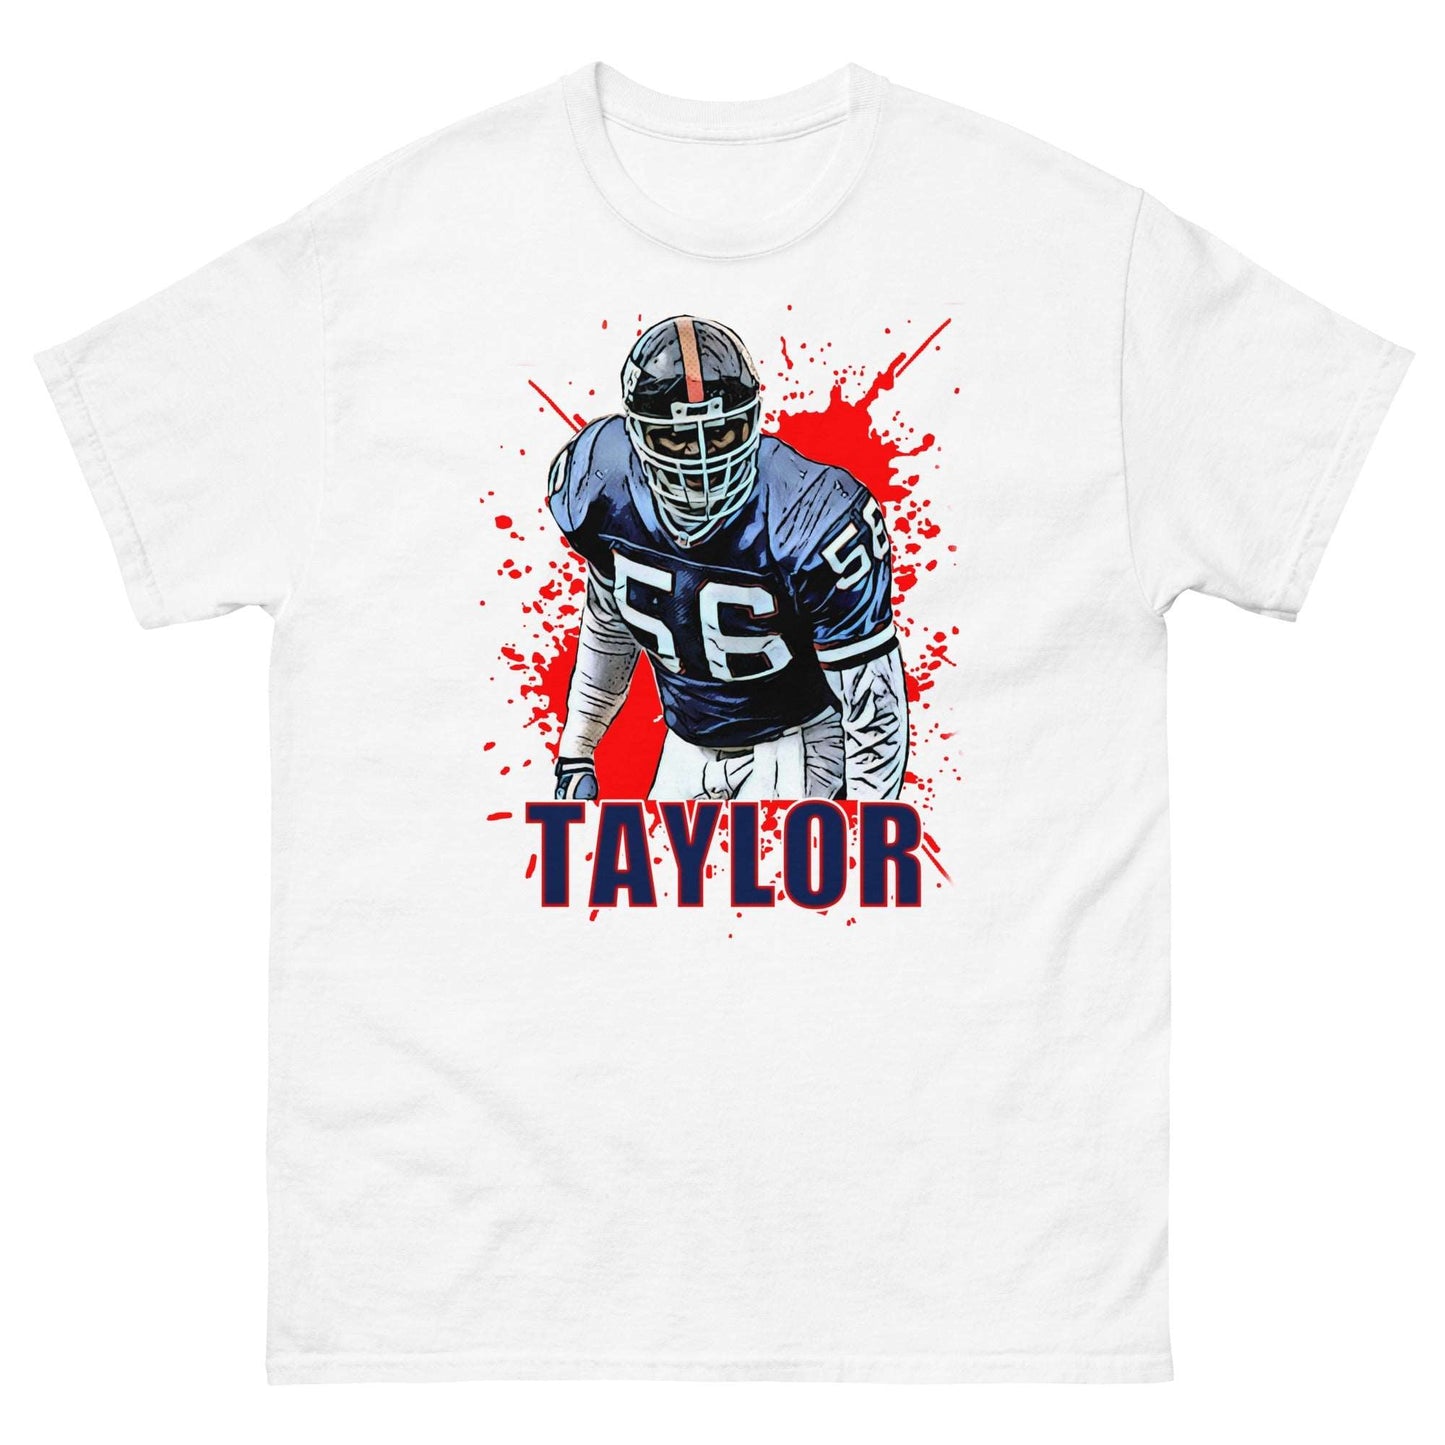 Lawrence Taylor Football Legend T-Shirt - thenightmareinc